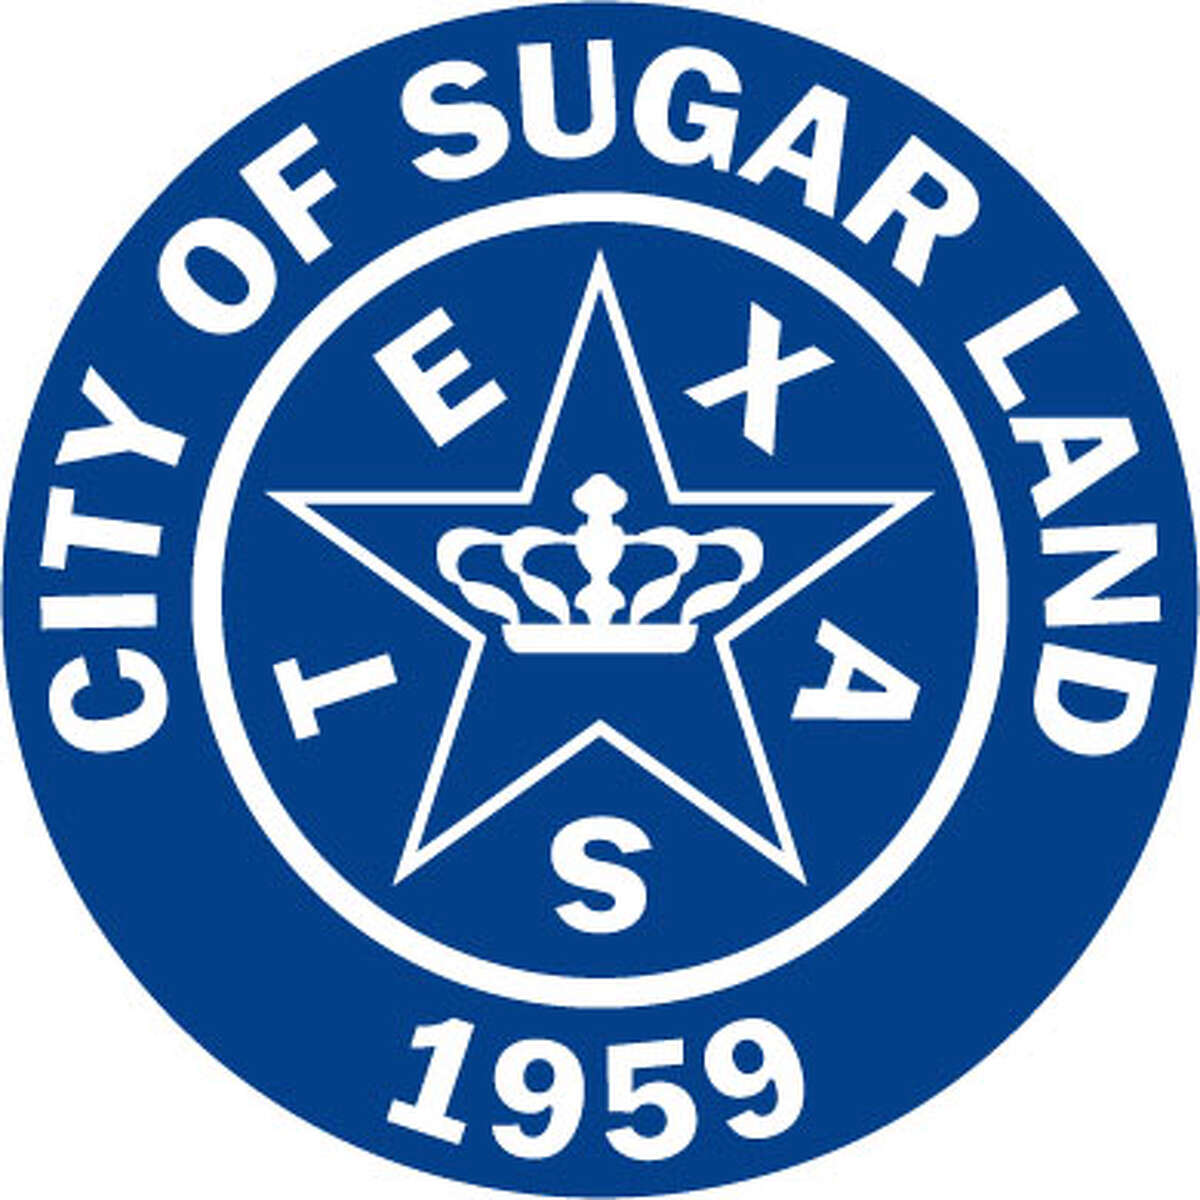 City of Sugar Land